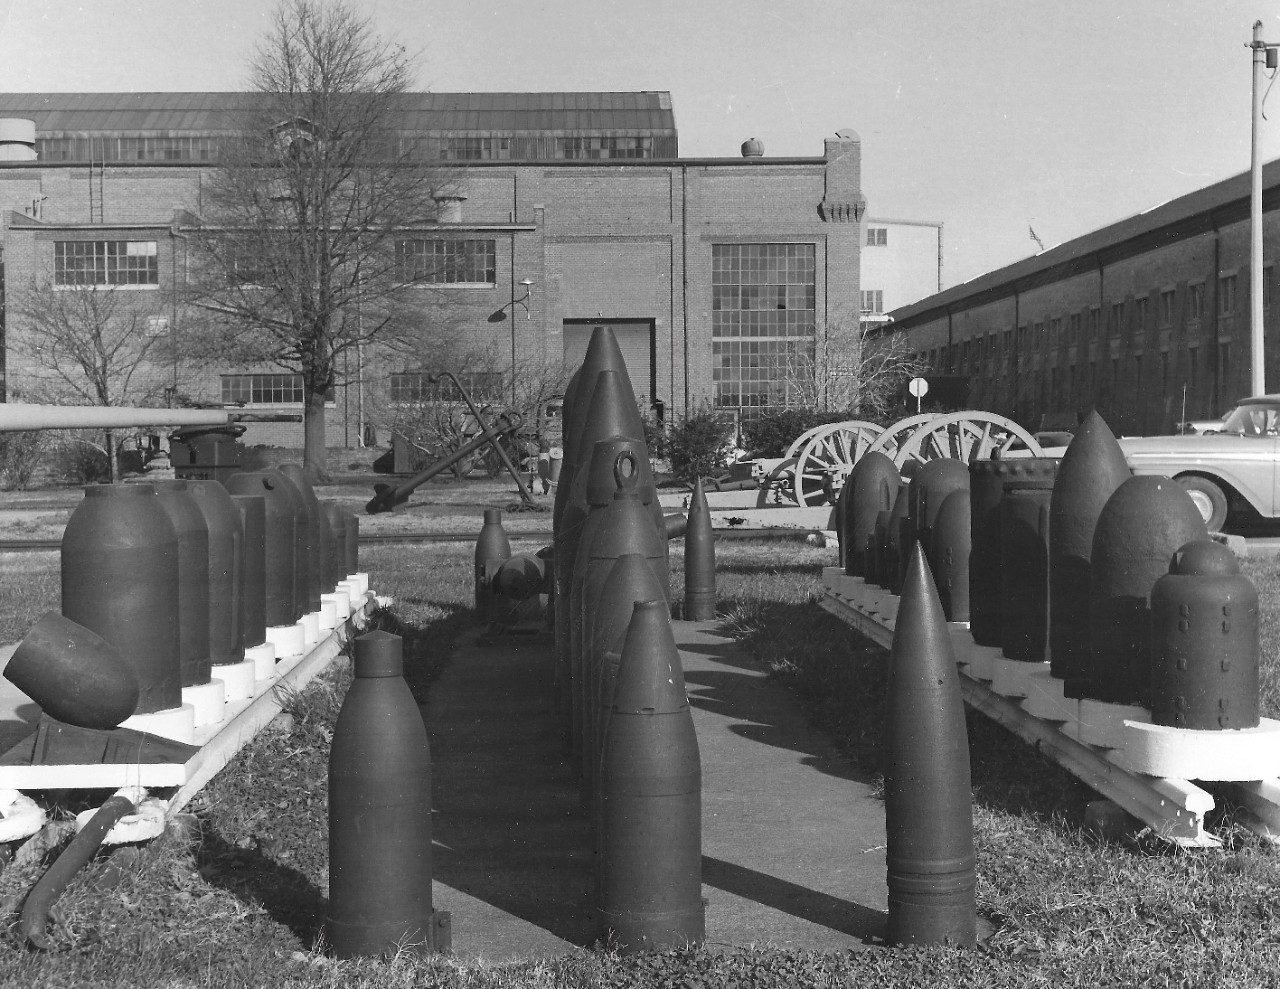 NMUSN-152:   Willard Park, Washington Navy Yard, Washington, D.C. 1970s.  WWII-era Japanese shells.  View looks north.  National Museum of the U.S. Navy. 